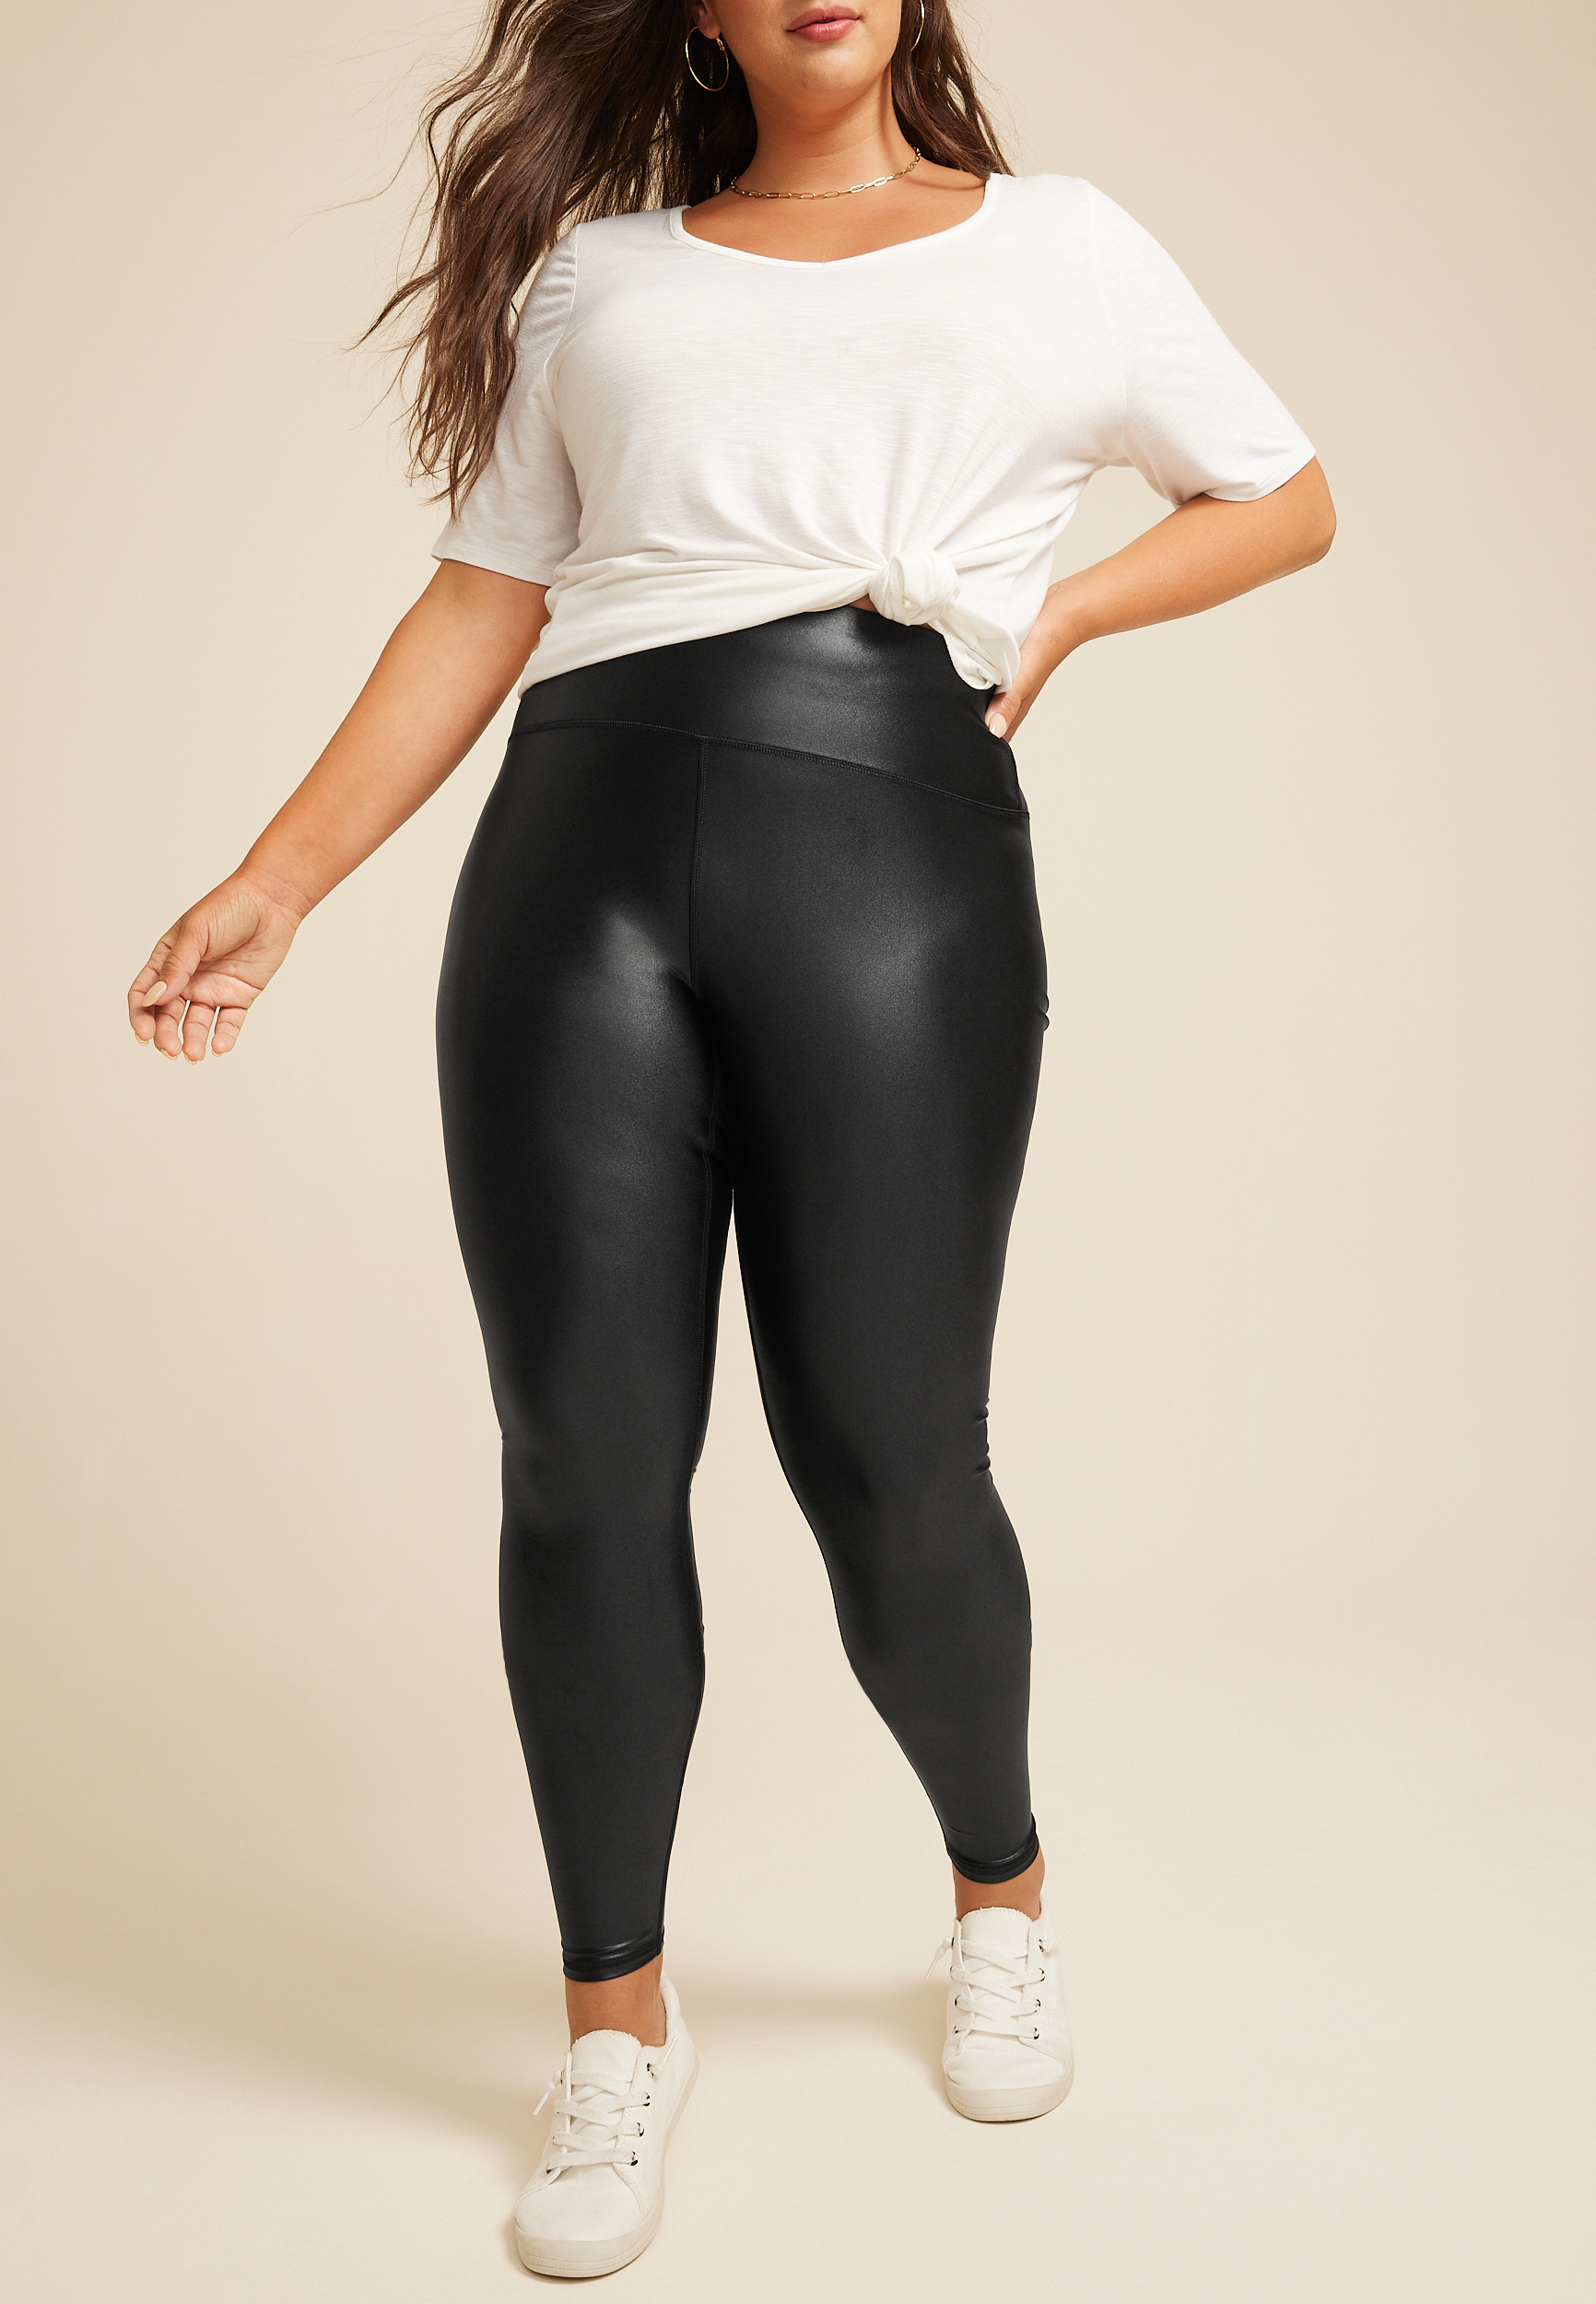 Nikki Leather Leggings sizes S-XL! Curvy available in sizes 1X-3X black  only! (High Waist)🤎🤎🤎 www.shopfashionchronicles.com